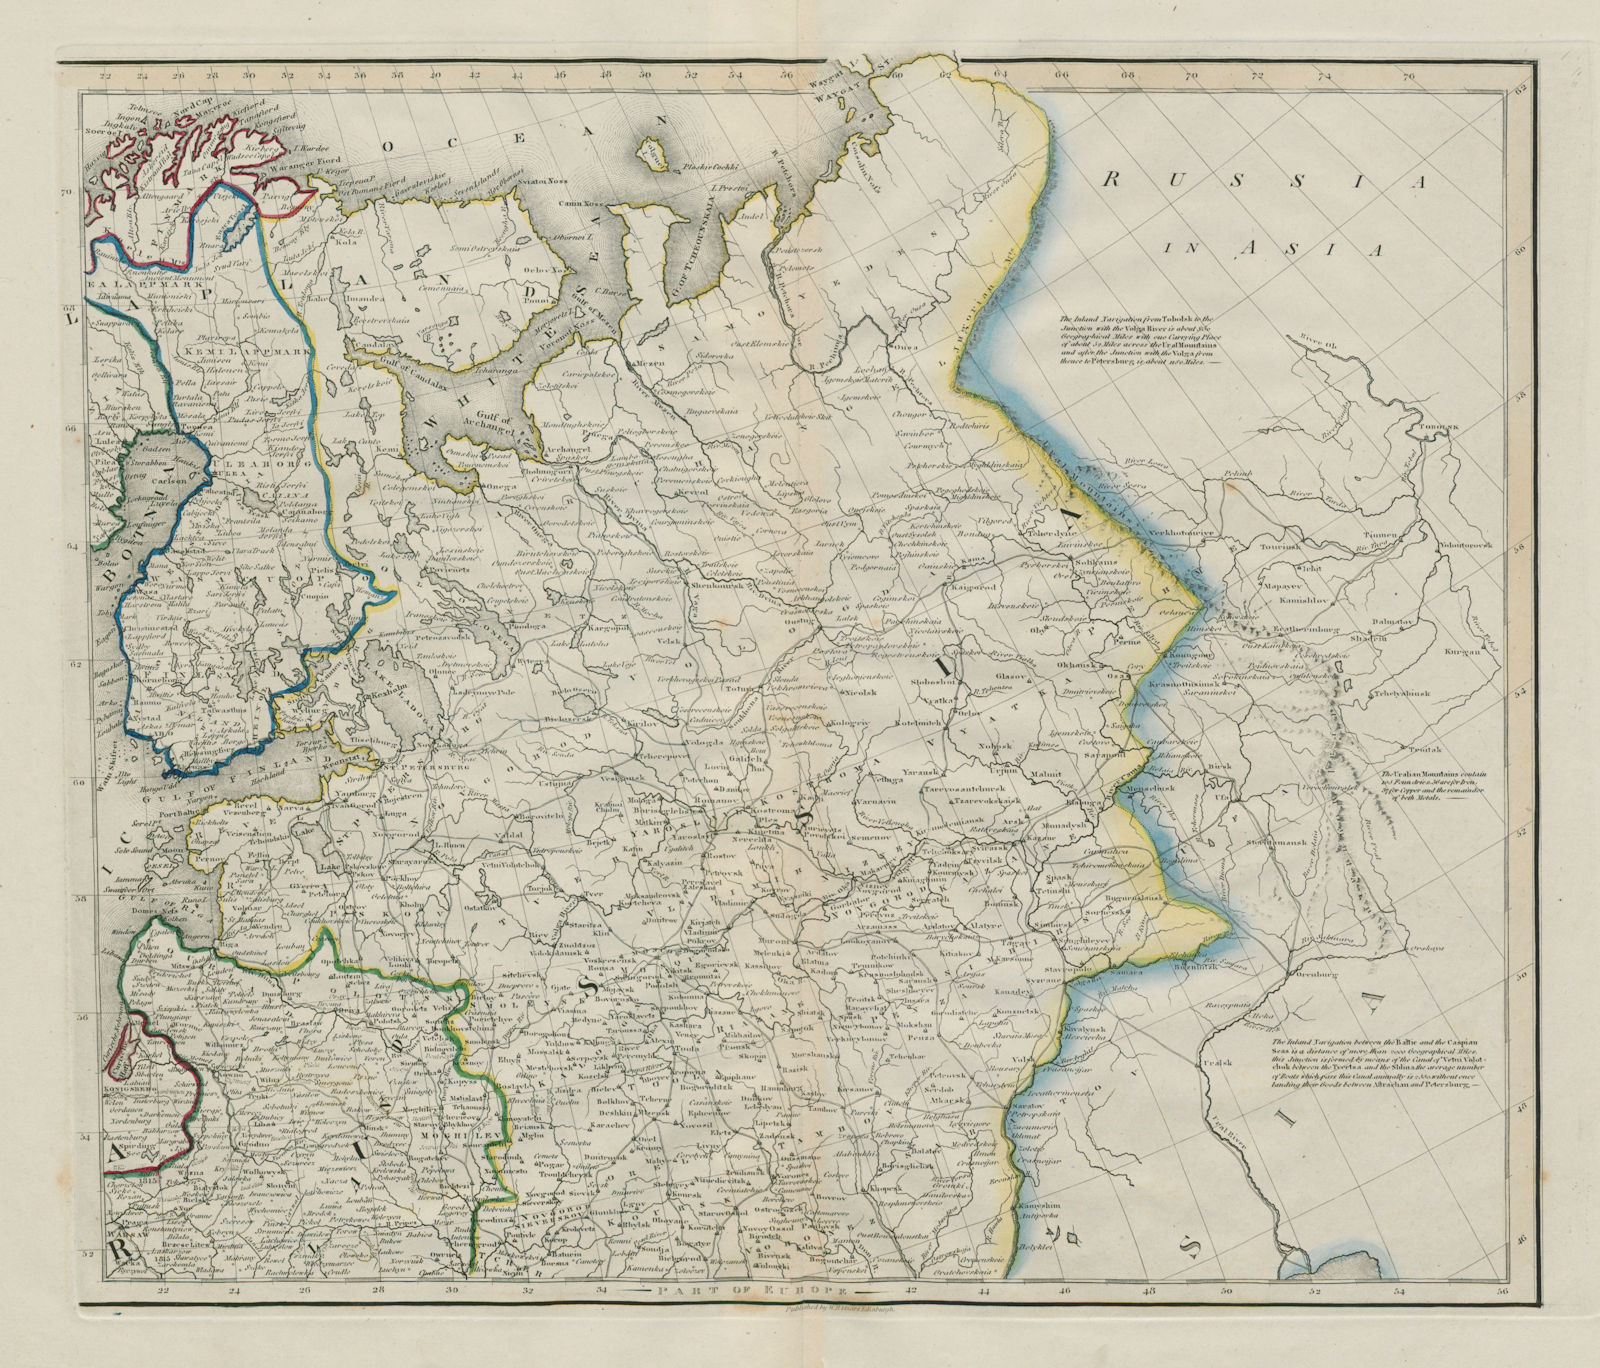 Associate Product North-east Europe. Russia Finland Latvia Estonia Baltics Belarus LIZARS 1842 map